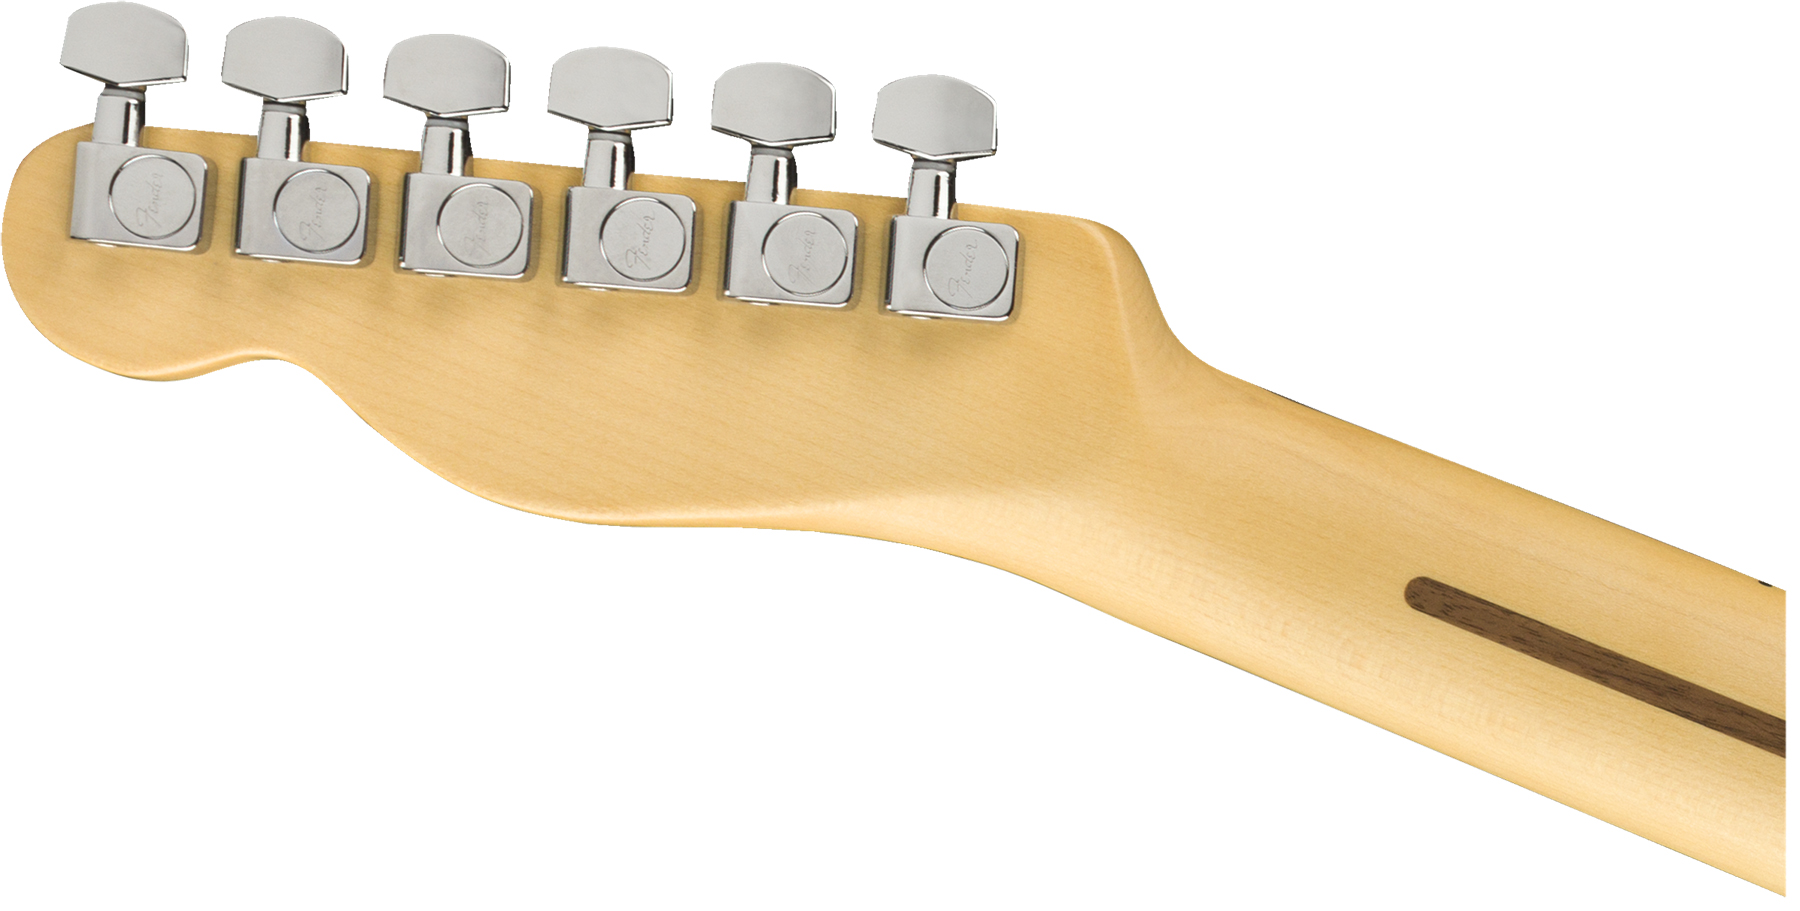 Fender Tele Quilt Maple Top Rarities Usa Mn - Blue Cloud - Tel shape electric guitar - Variation 3